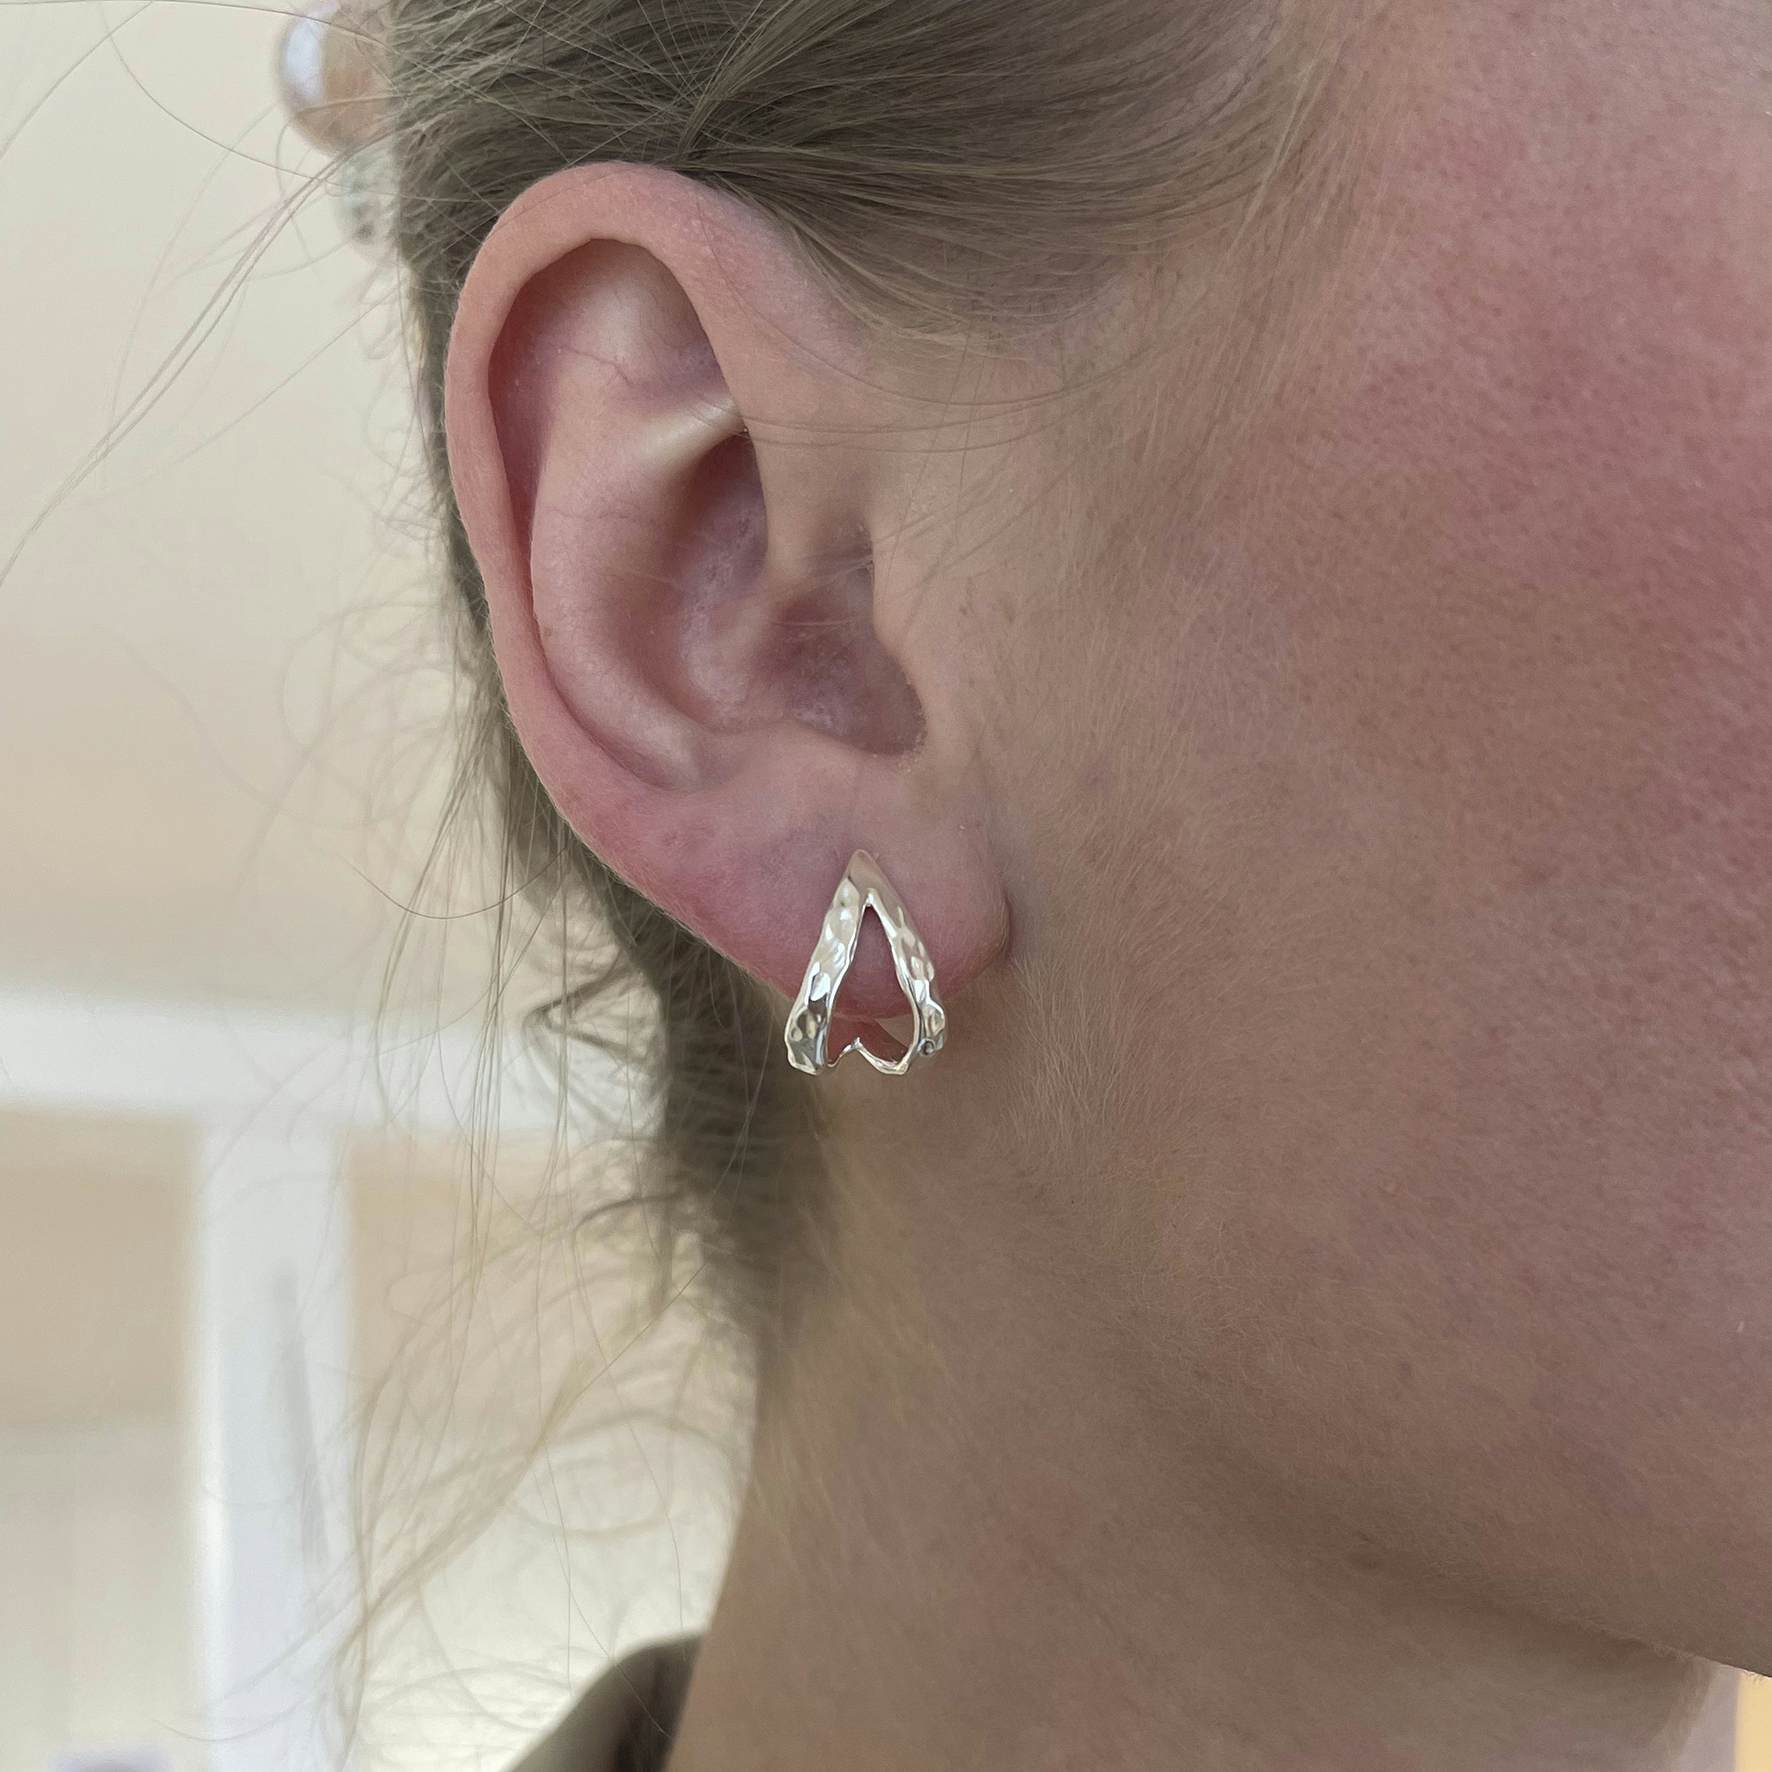 Breakup Earring von Jane Kønig in Silber Sterling 925